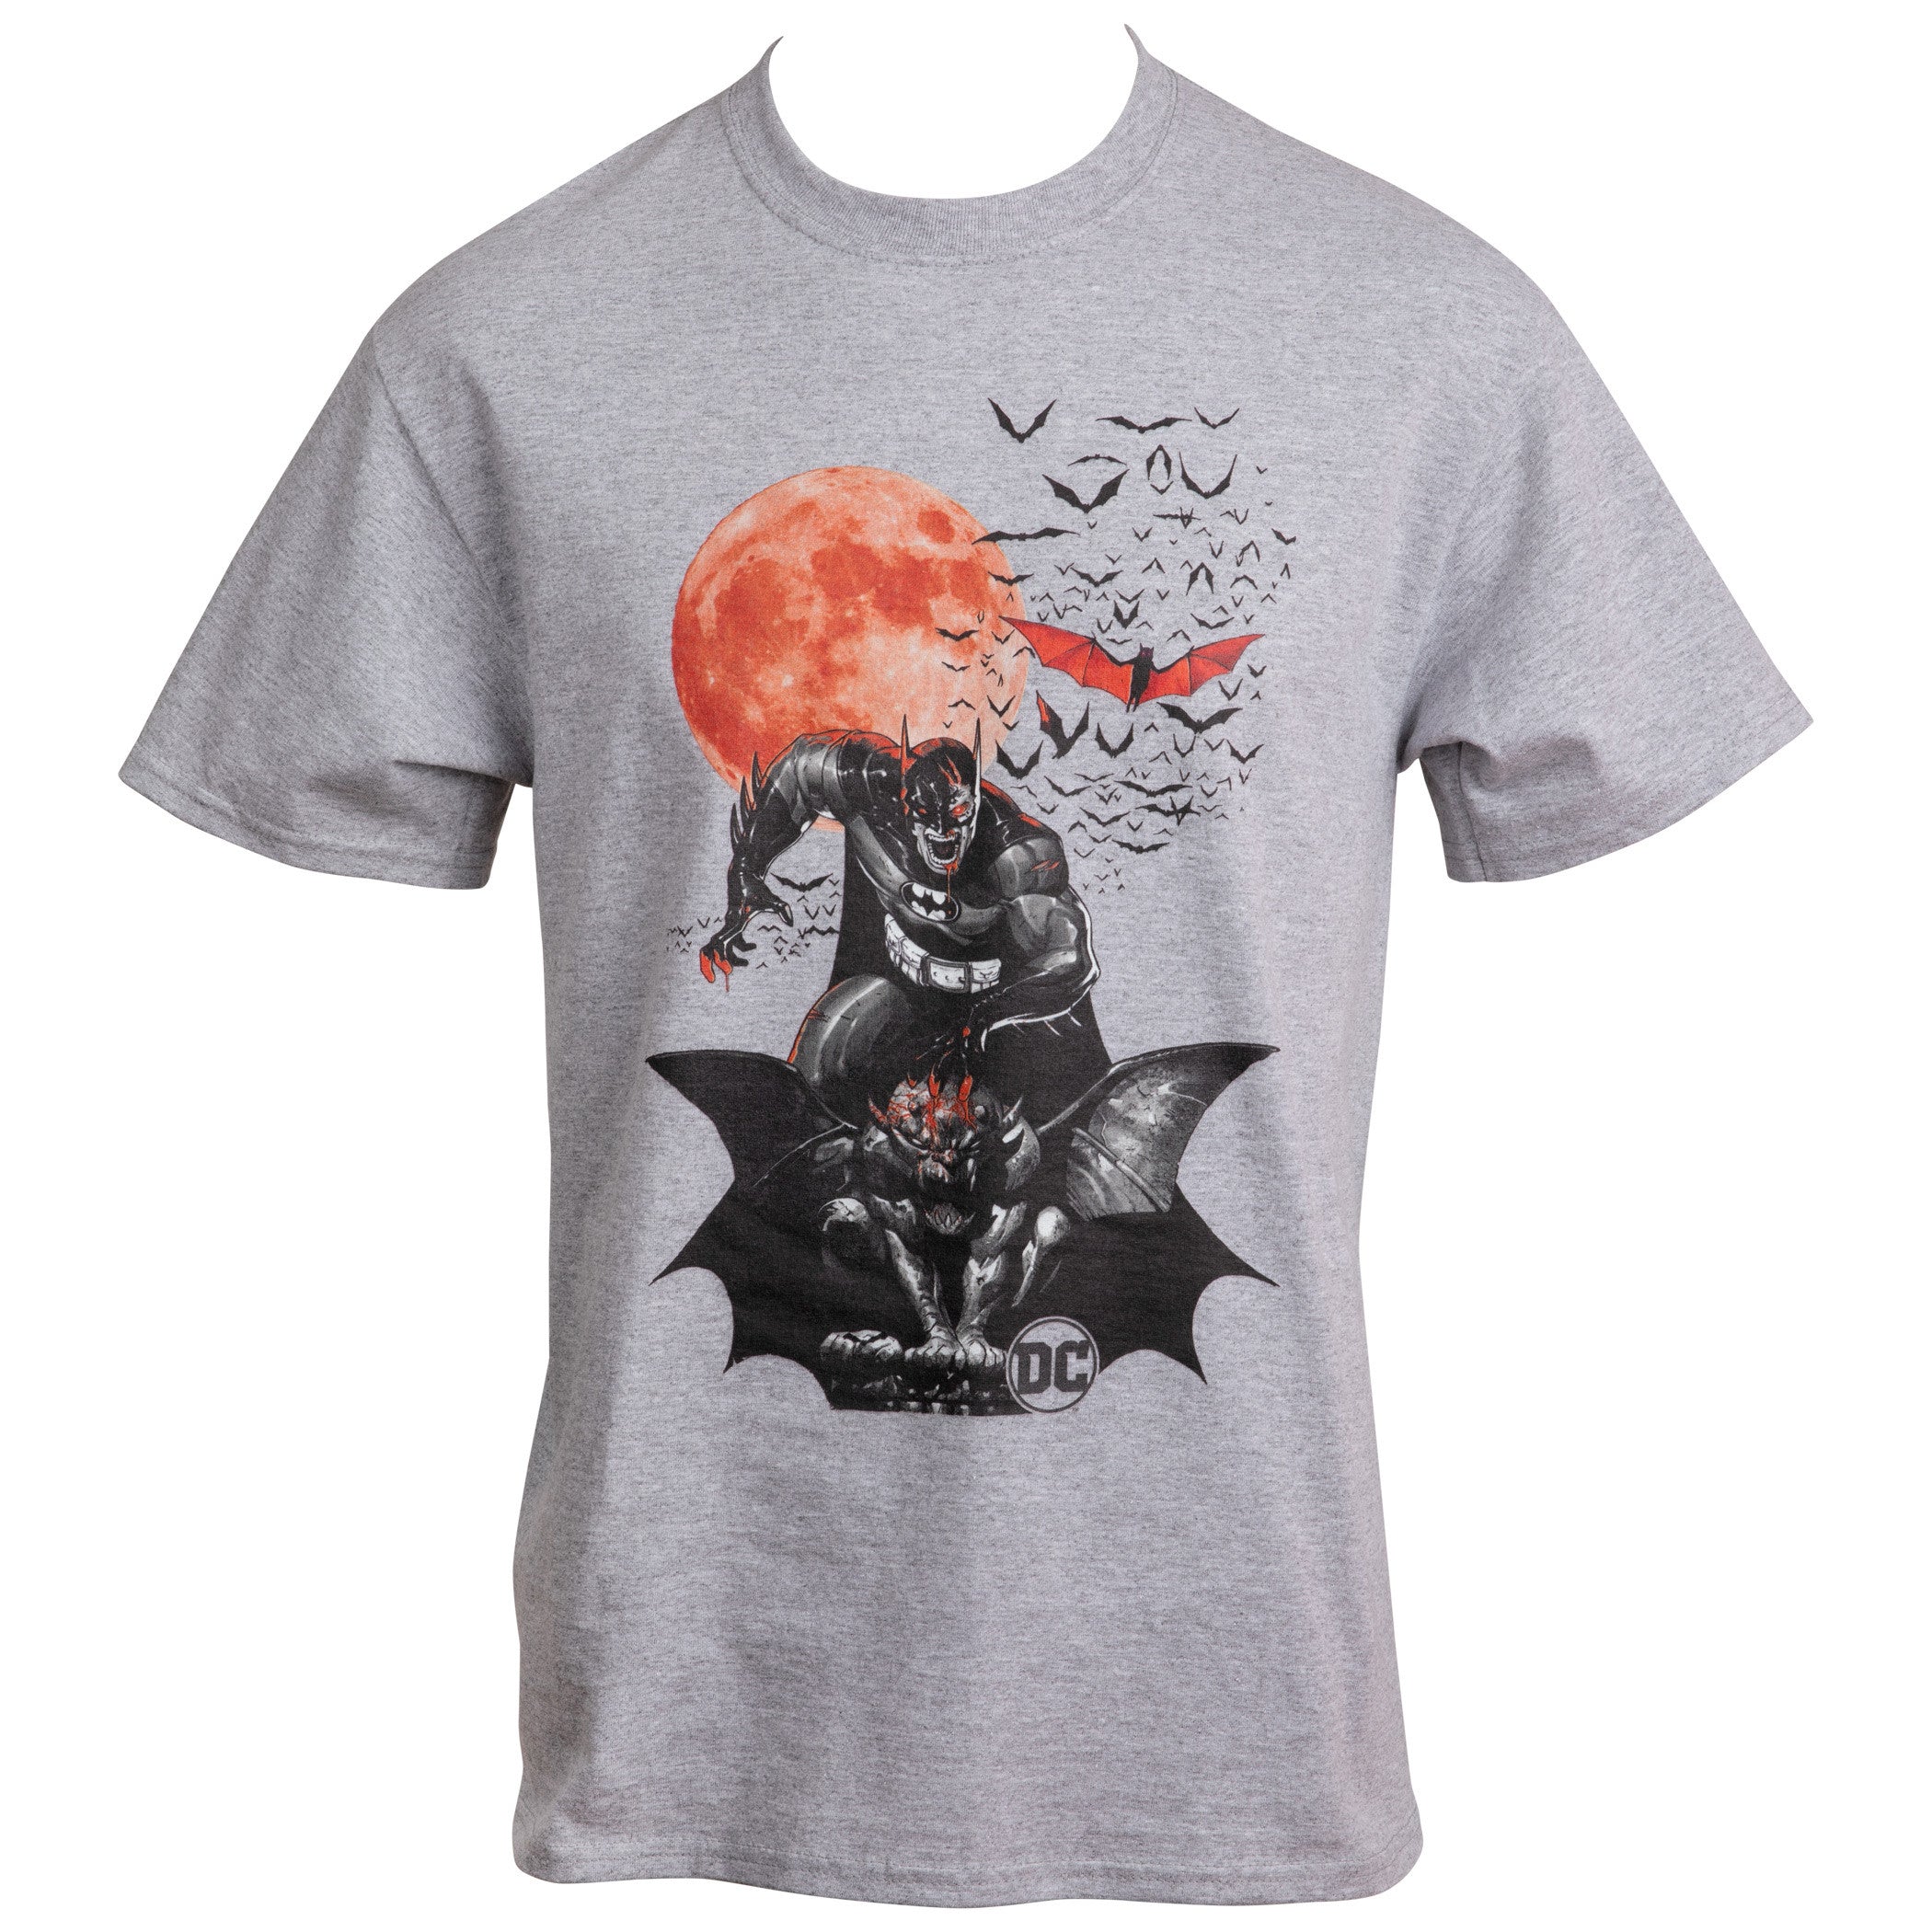 title:DC Comics Book of Batman Blood Moon Zombie T-Shirt;color:Grey